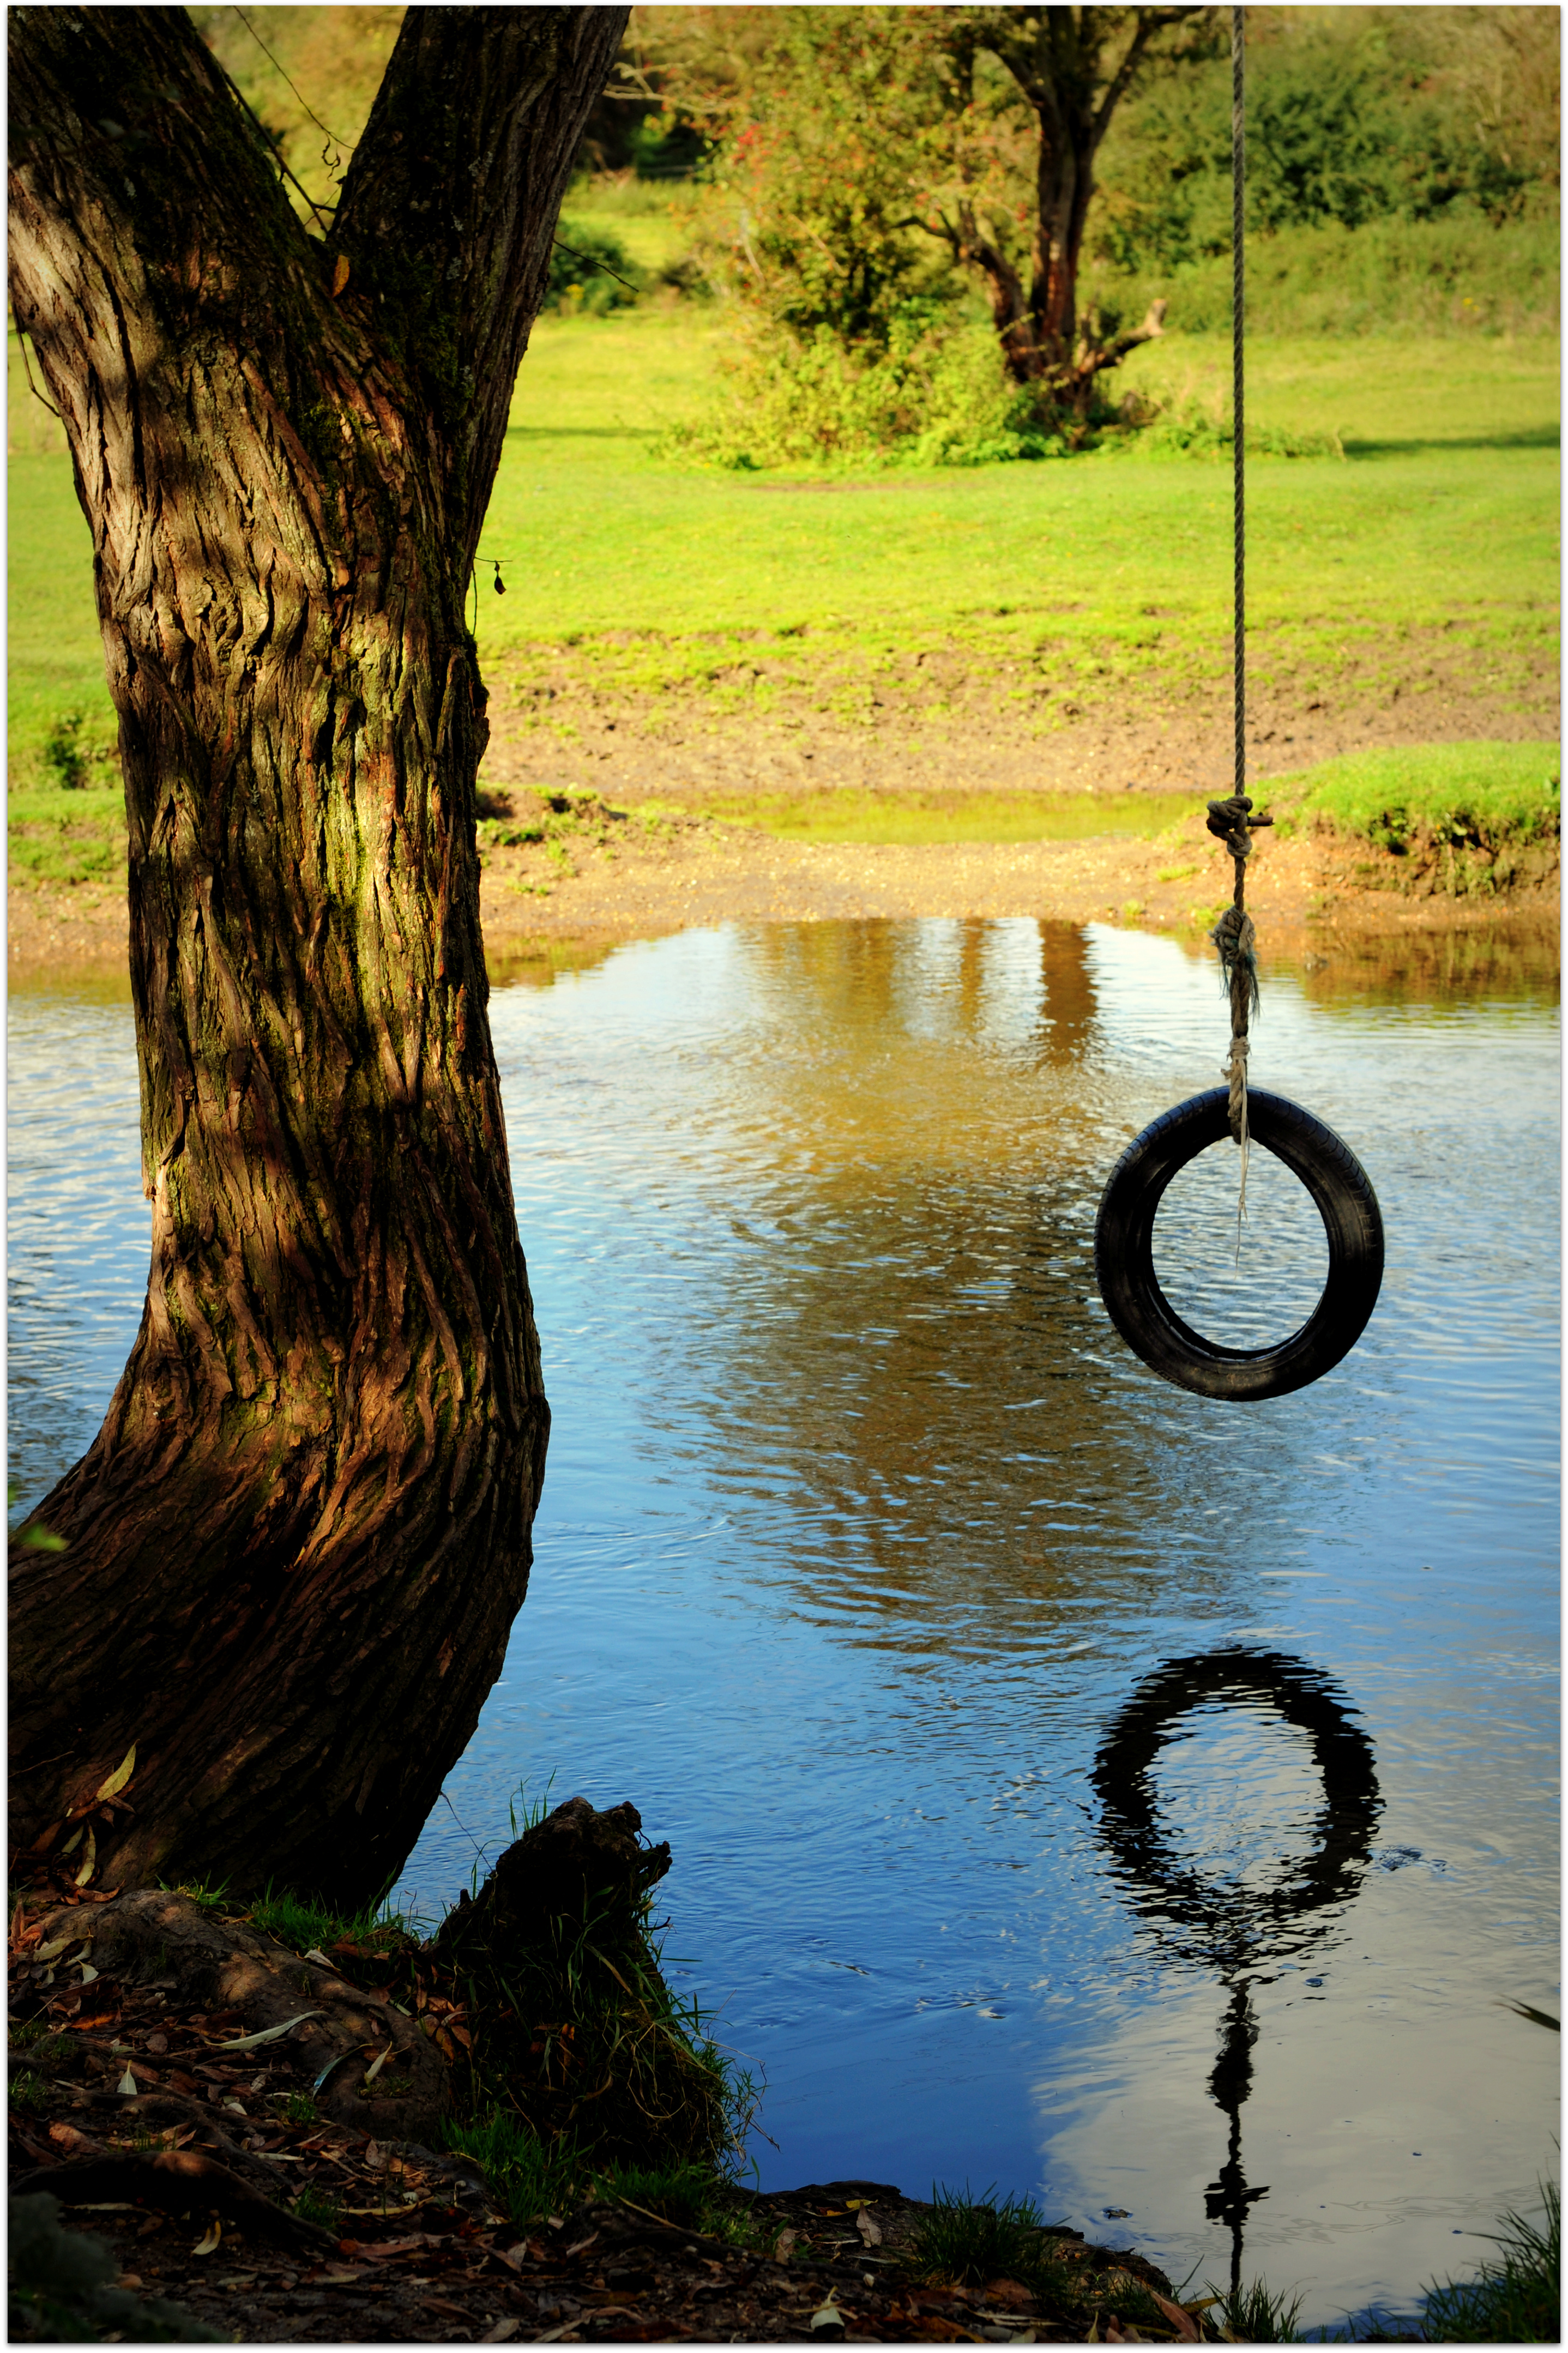 Rope Swing Over The River Soar. by Chrobal on DeviantArt